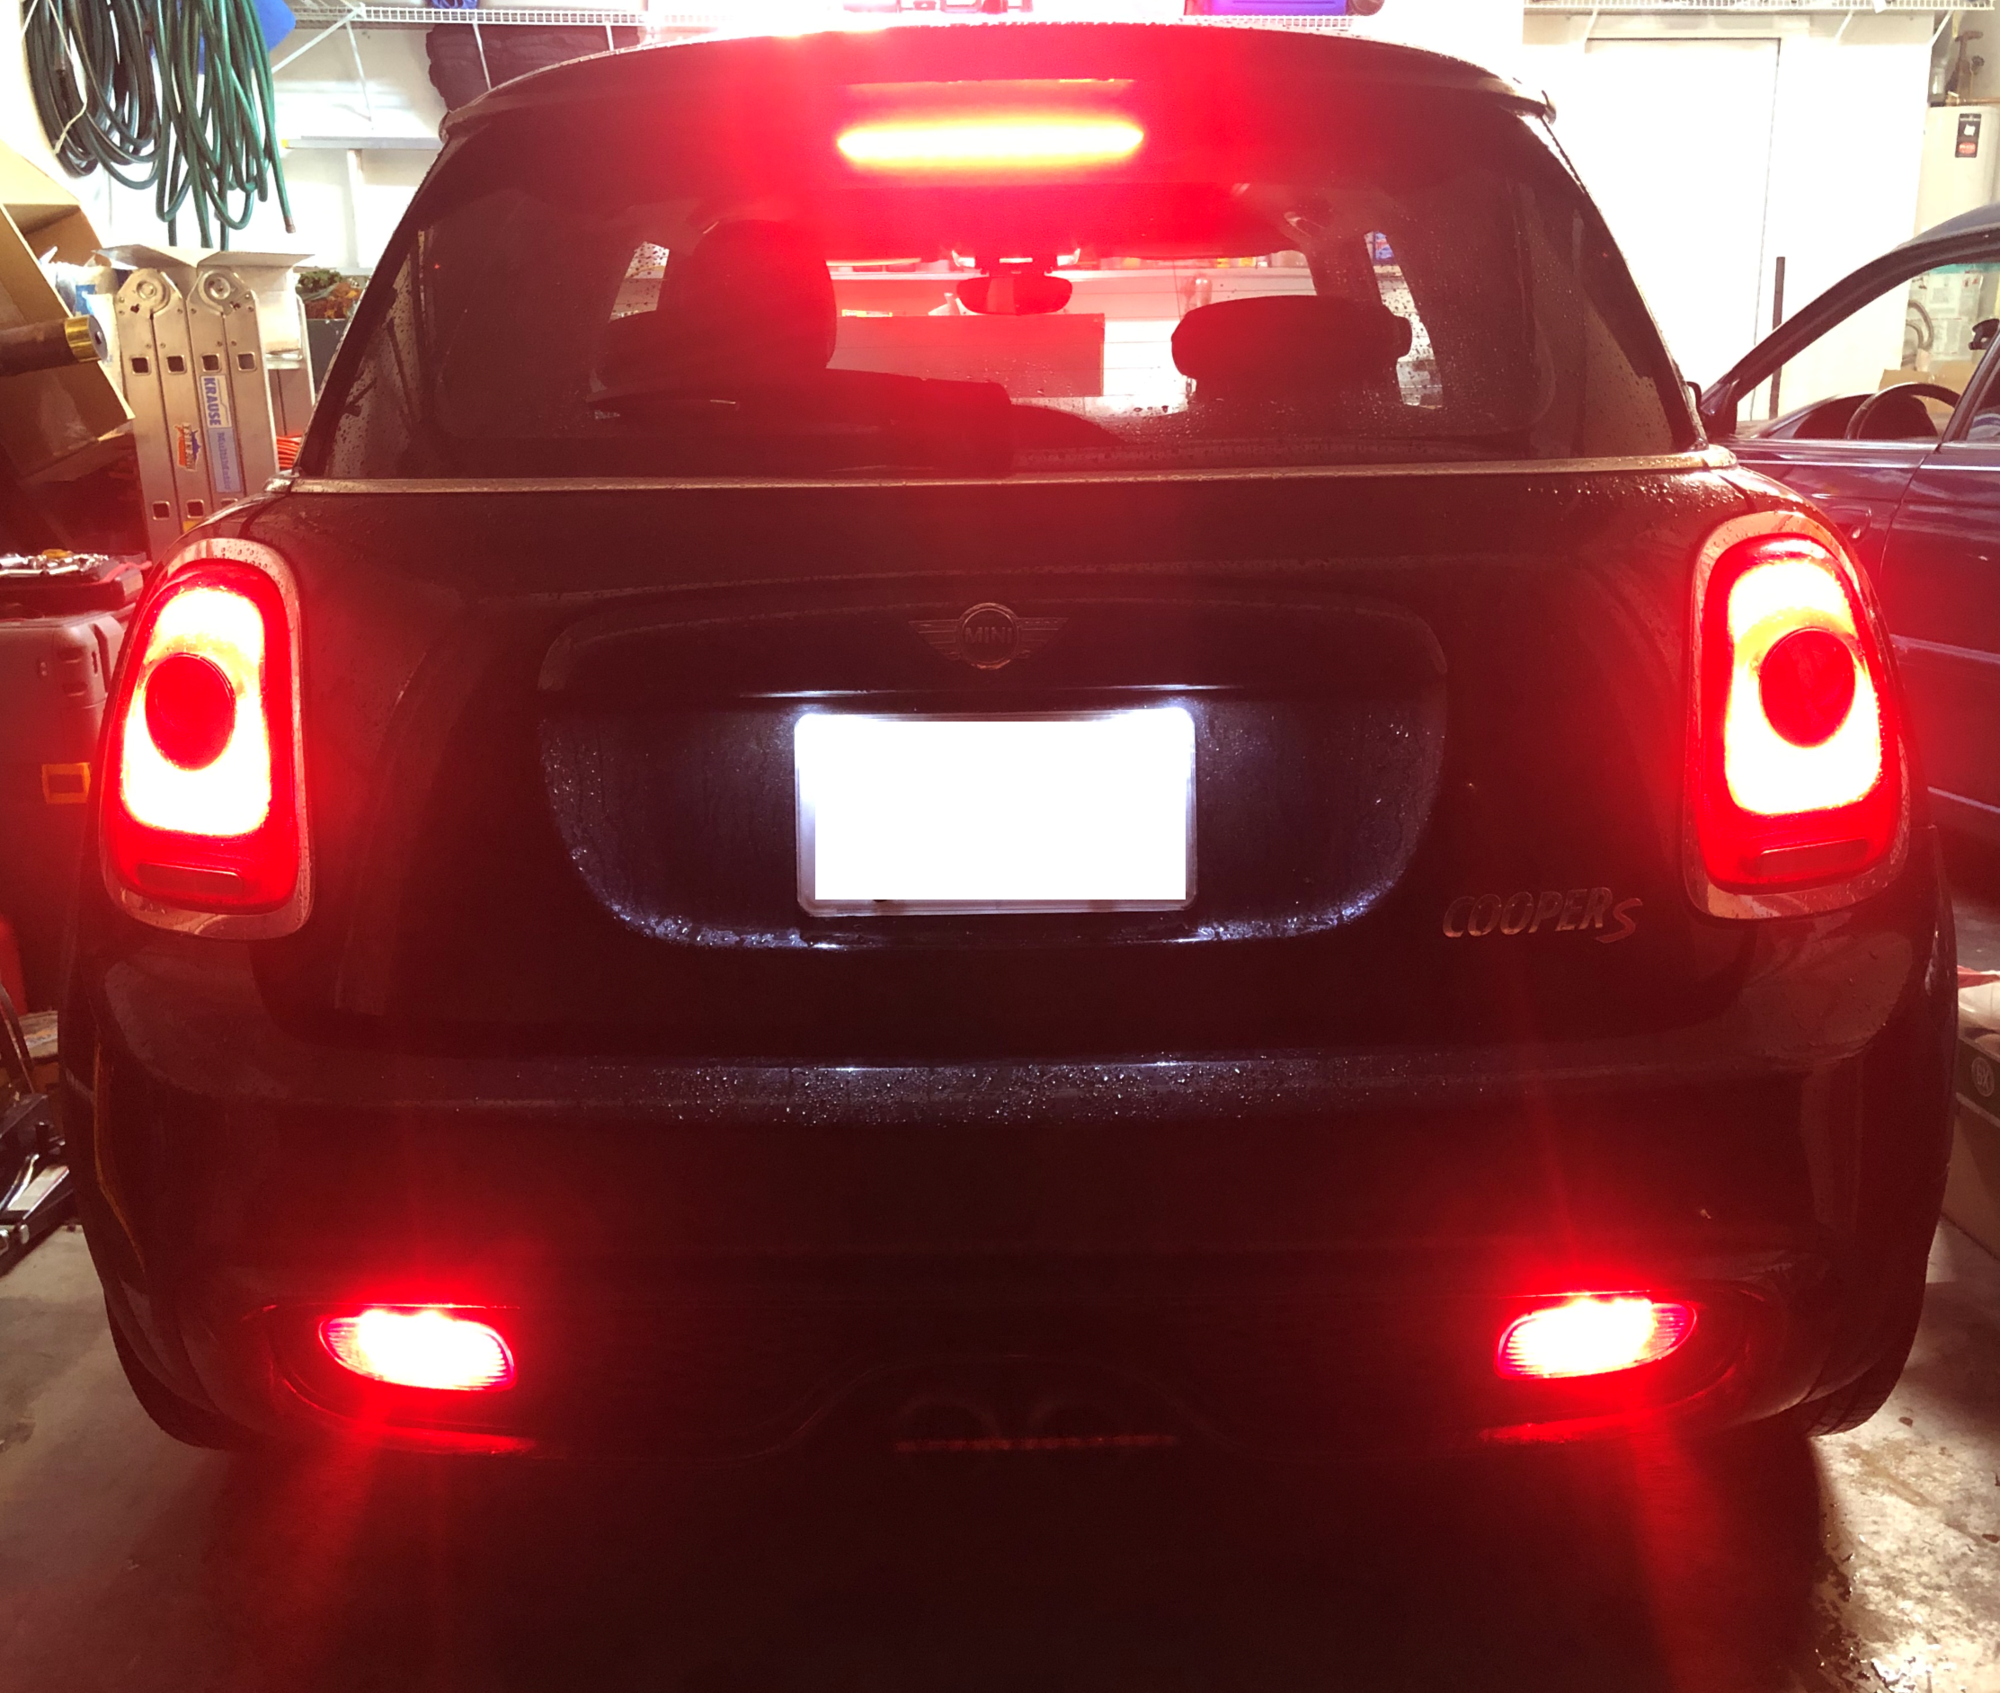 US STANDLICHT BLINKER Module us parking lights for BMW Audi